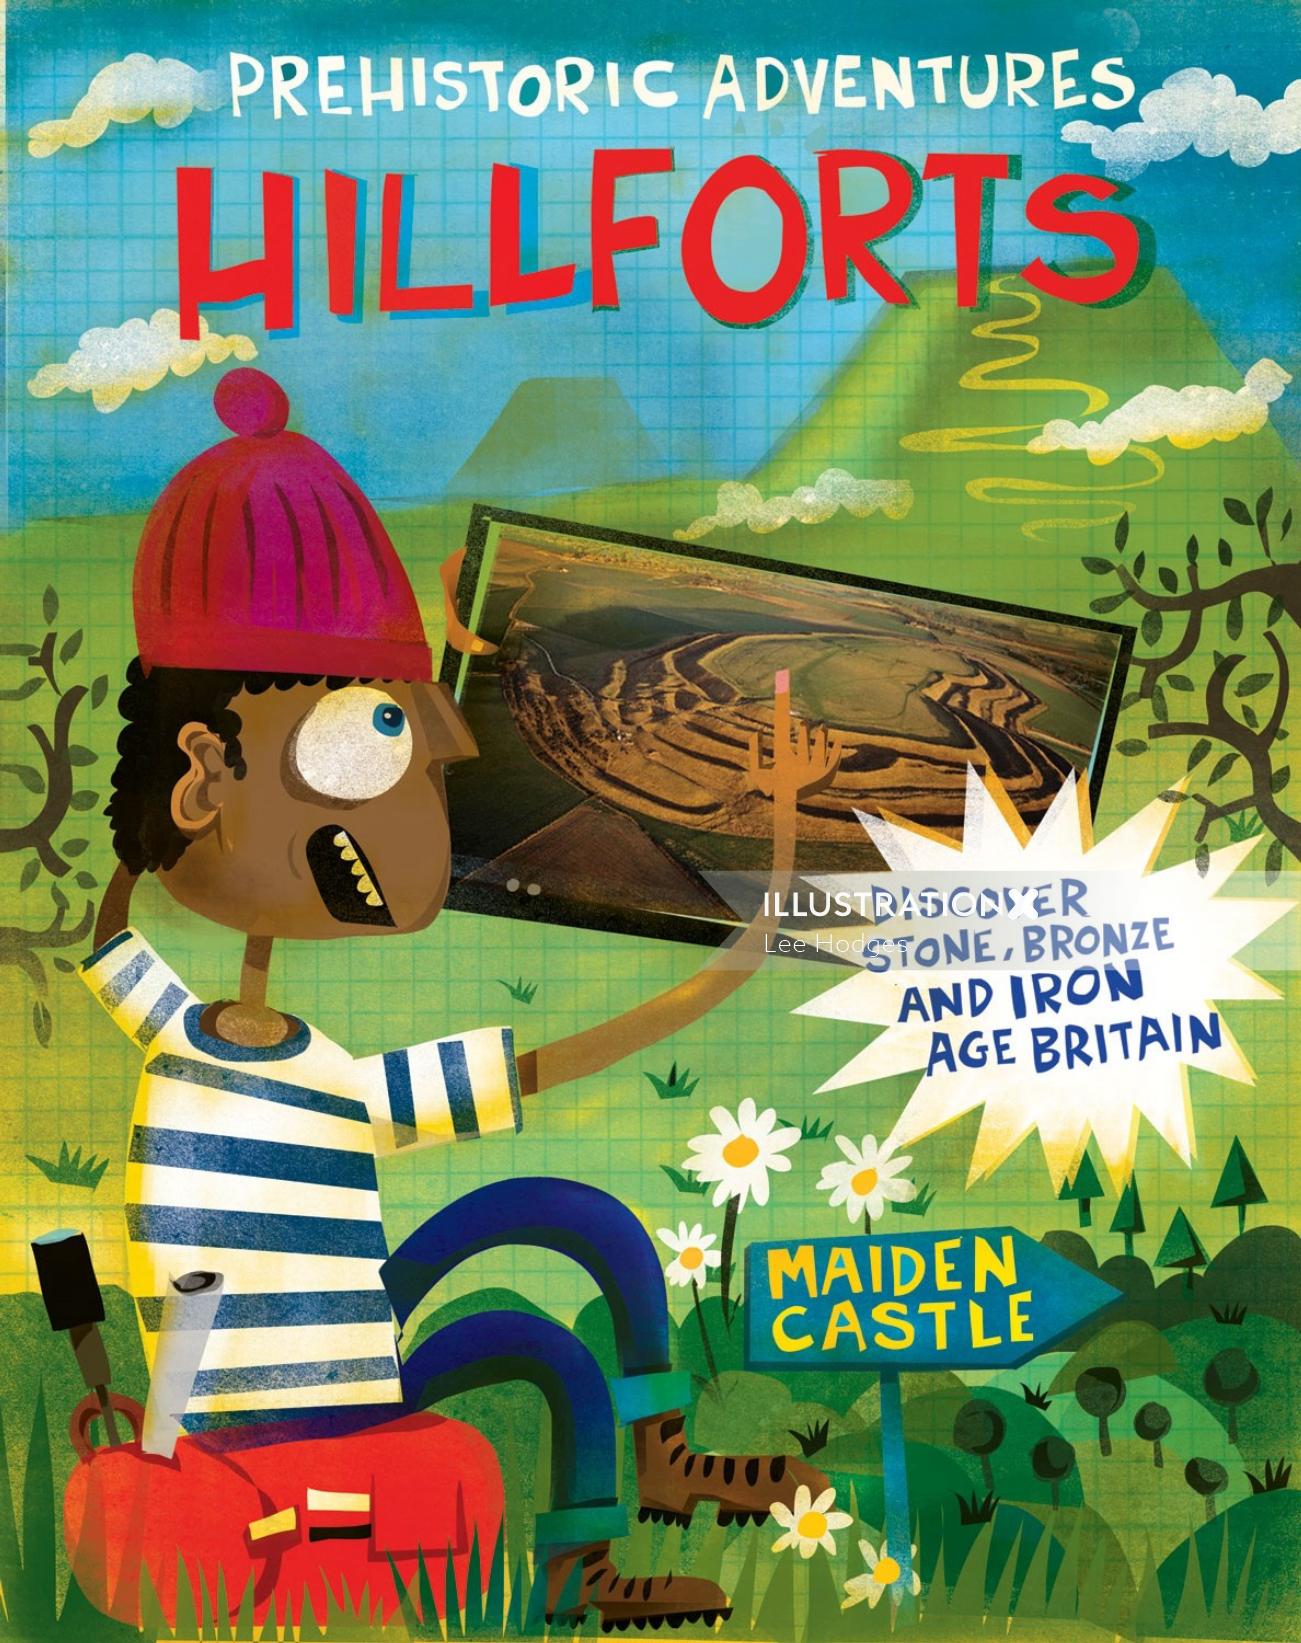 Prehistoric Adventures: Hill Forts book illustration